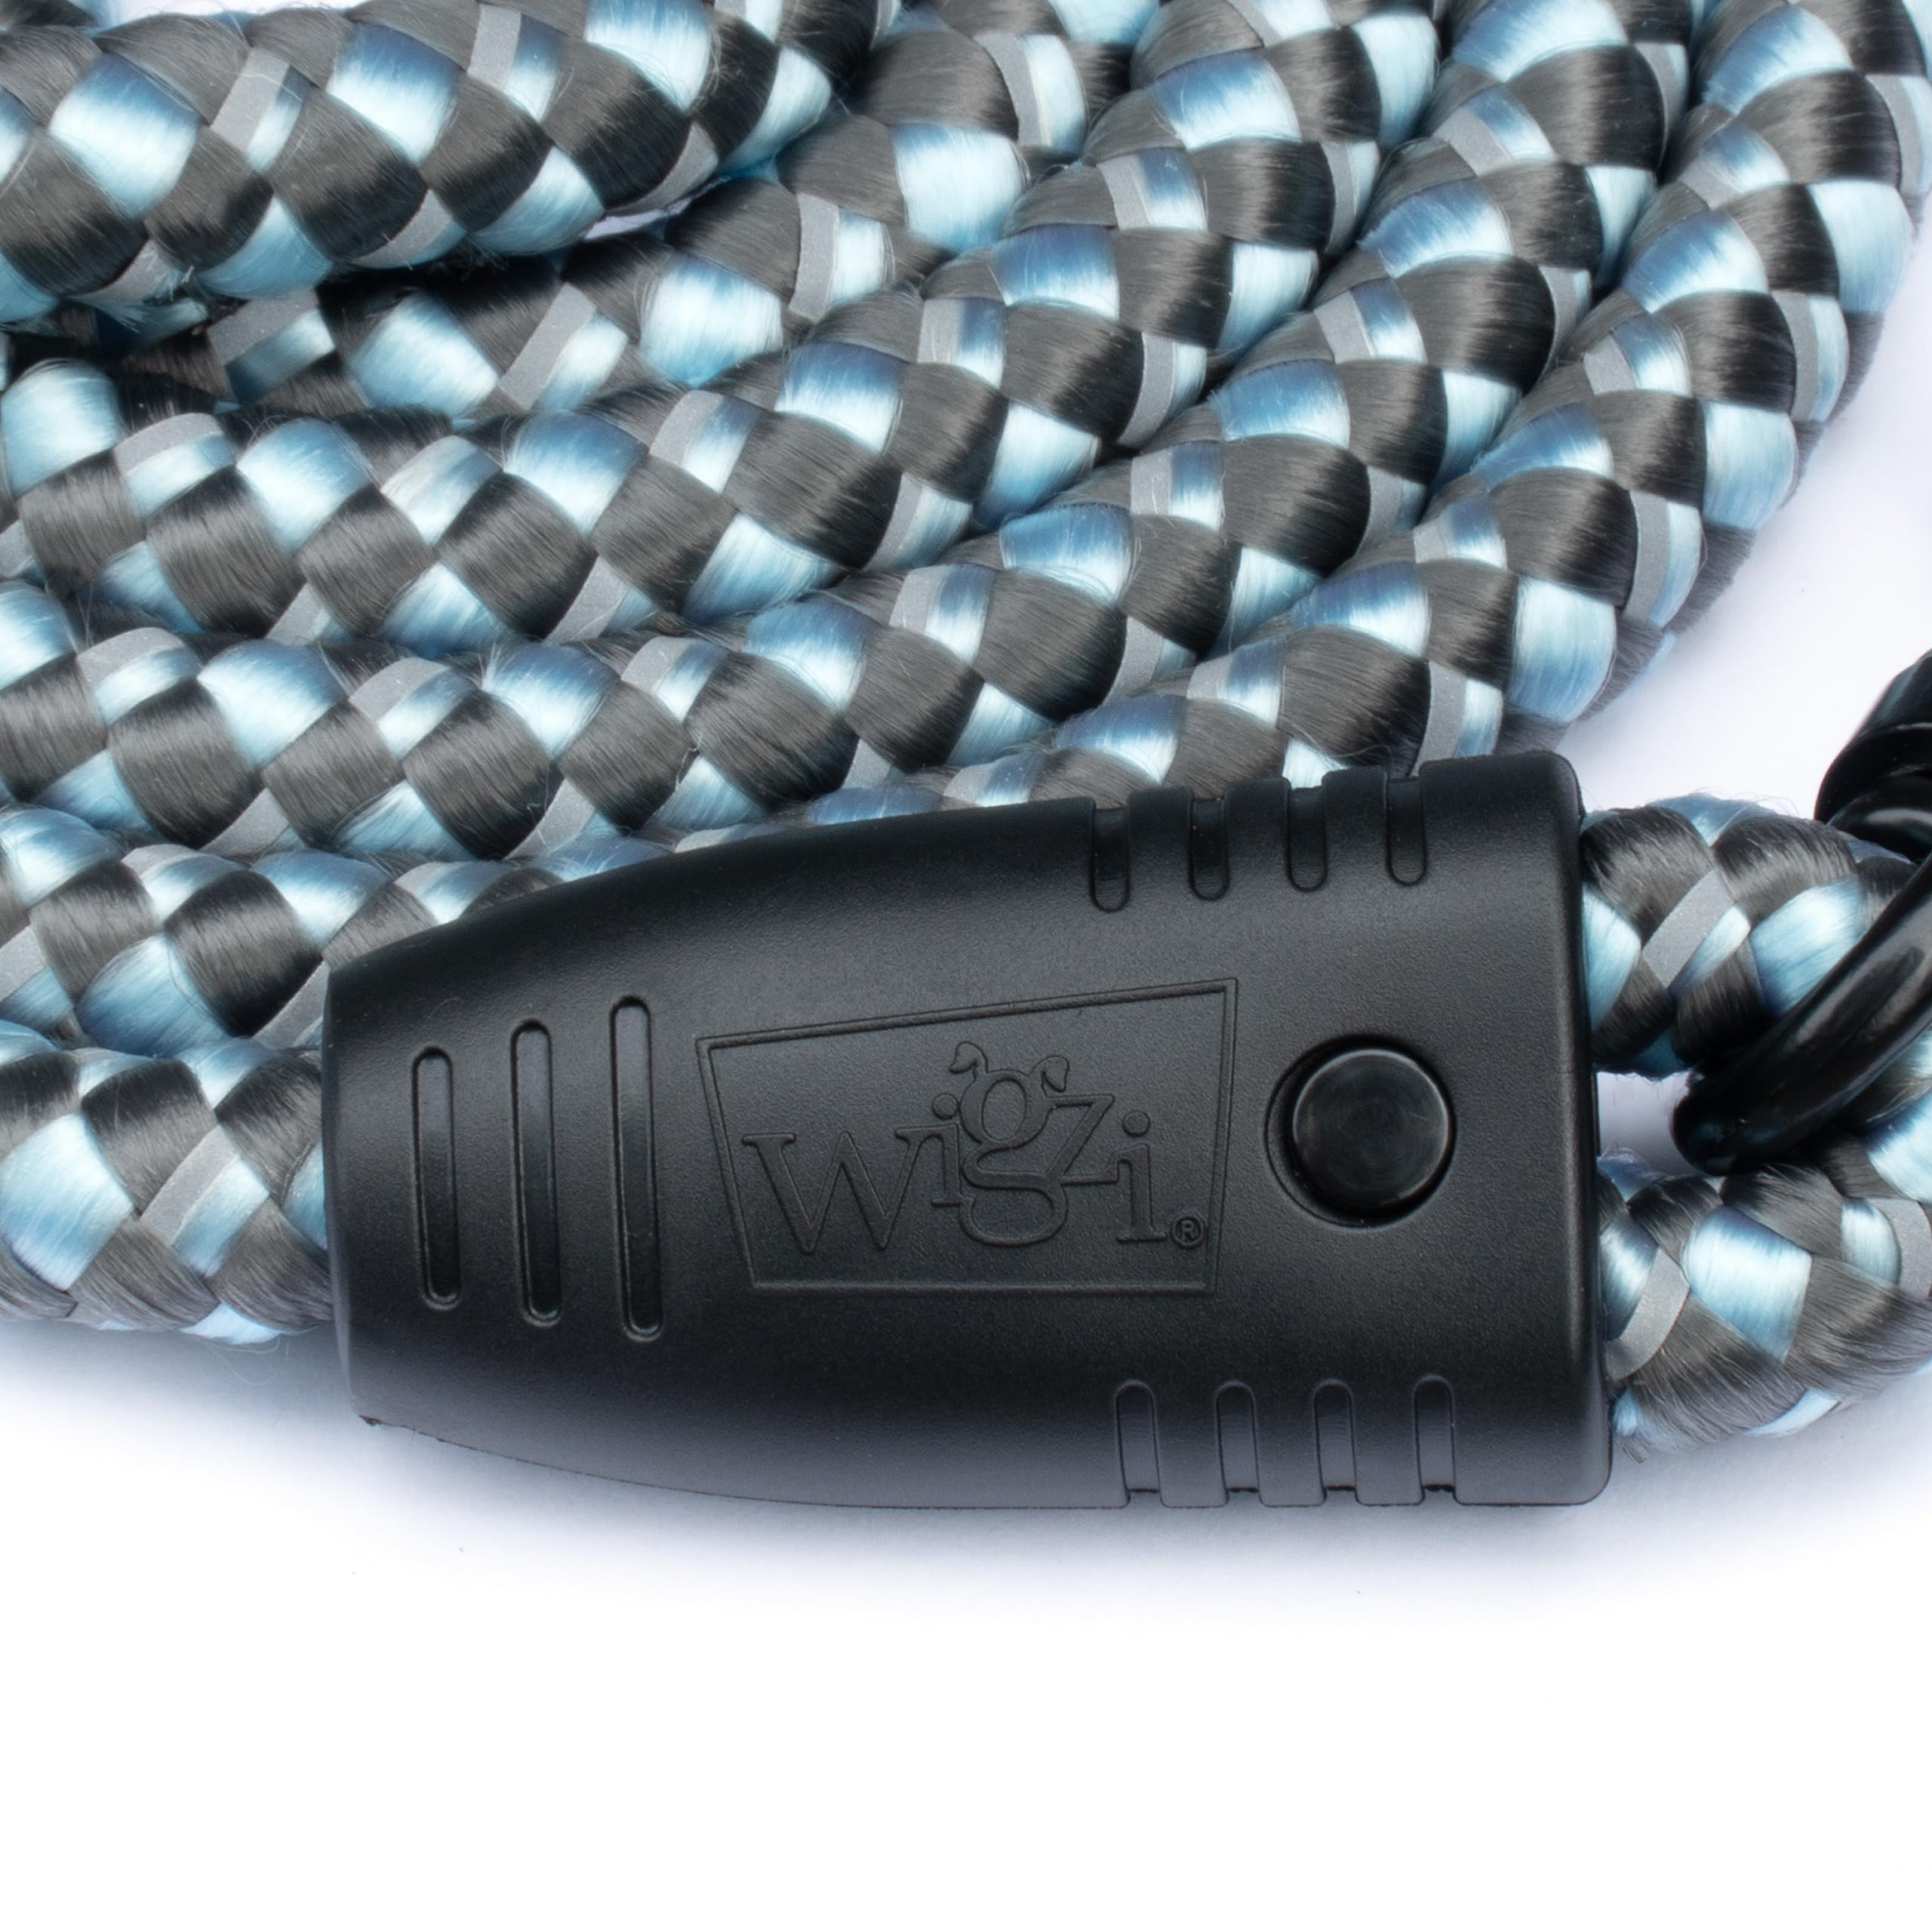 Wigzi Flex Walk Reflective Bungi Cable Dog Leash - Blue - 6 Feet  